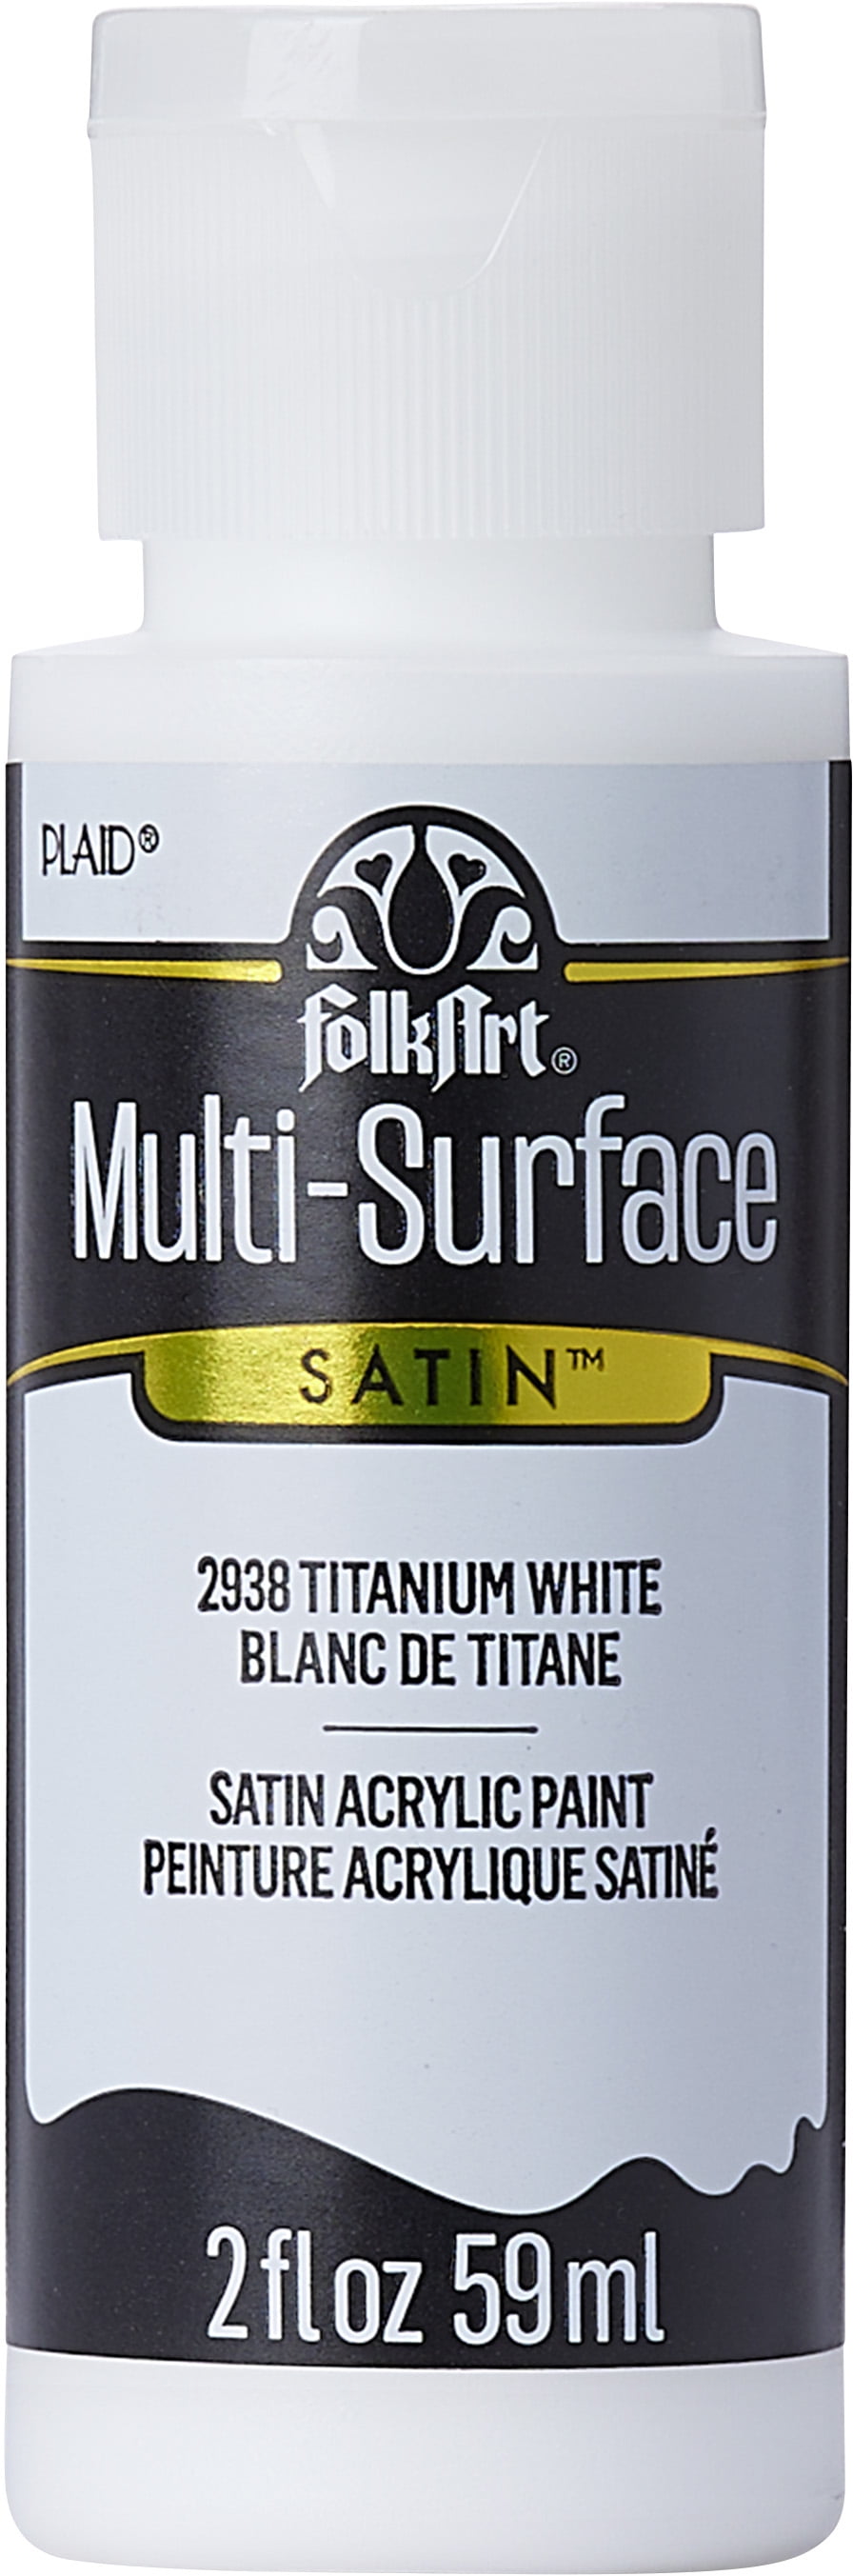 FolkArt Multi-Surface Acrylic Craft Paint, Satin Finish, Titanium White, 2  fl oz 